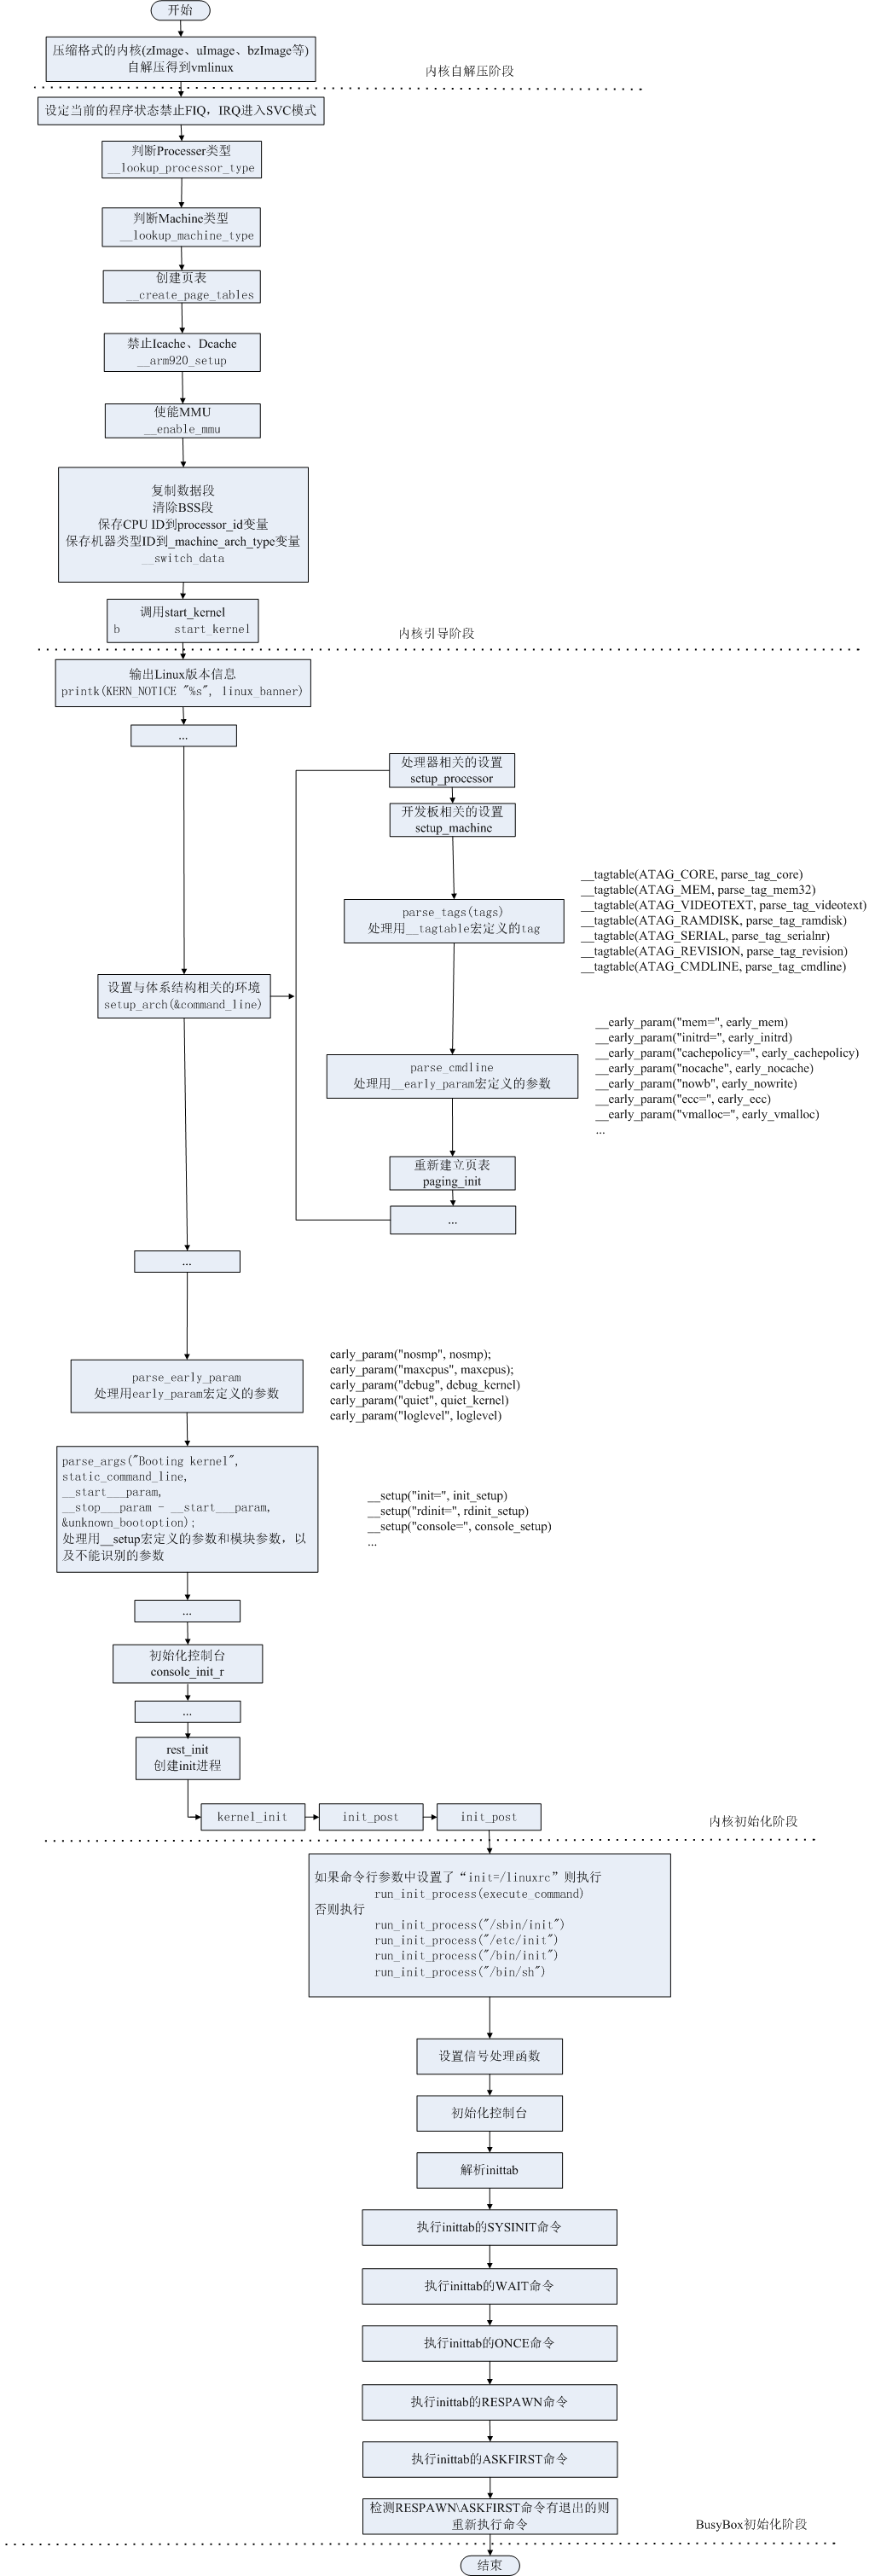 linux内核启动流程(文章最后流程图)